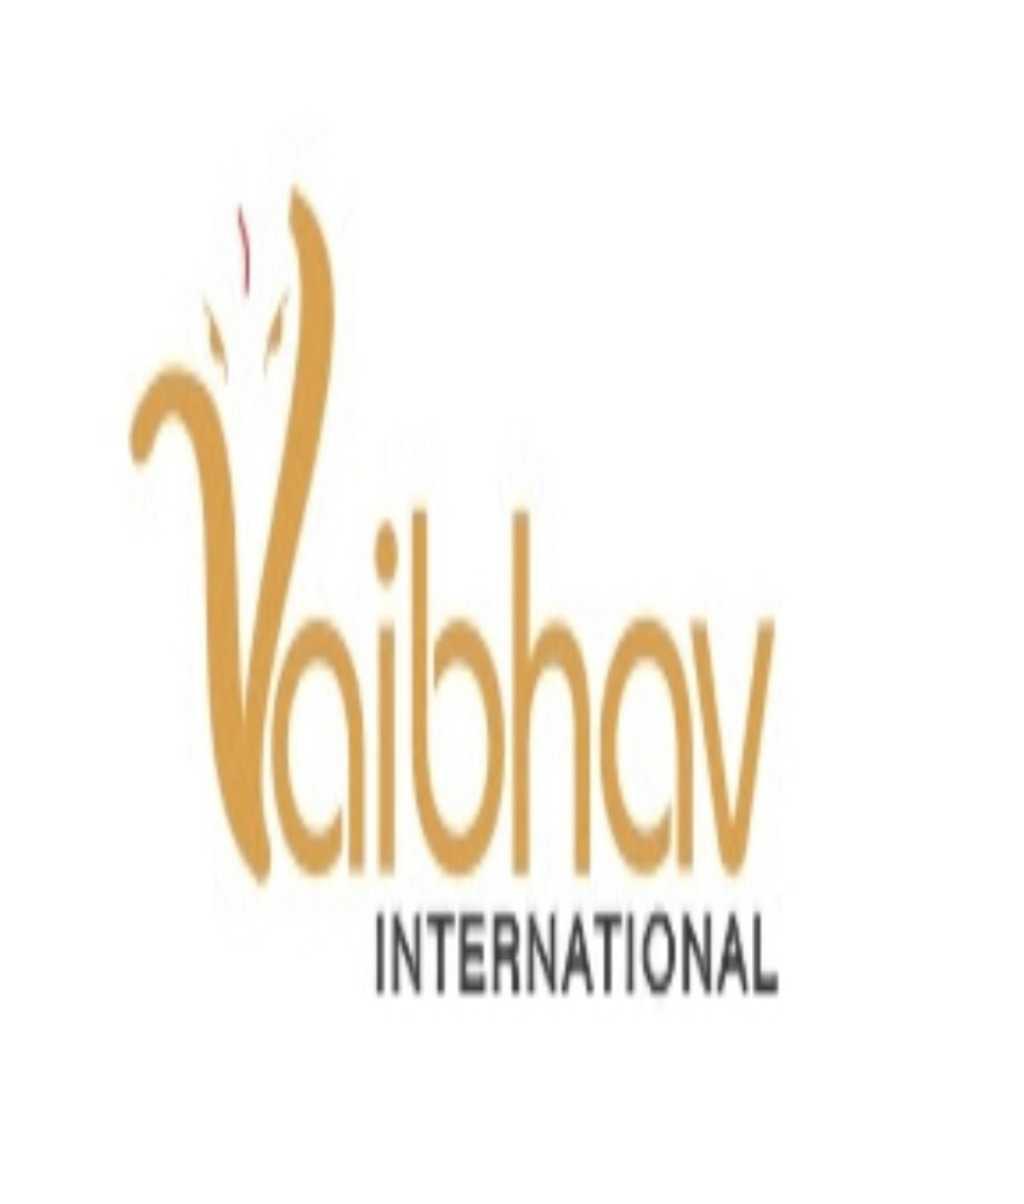 Vaibhav International